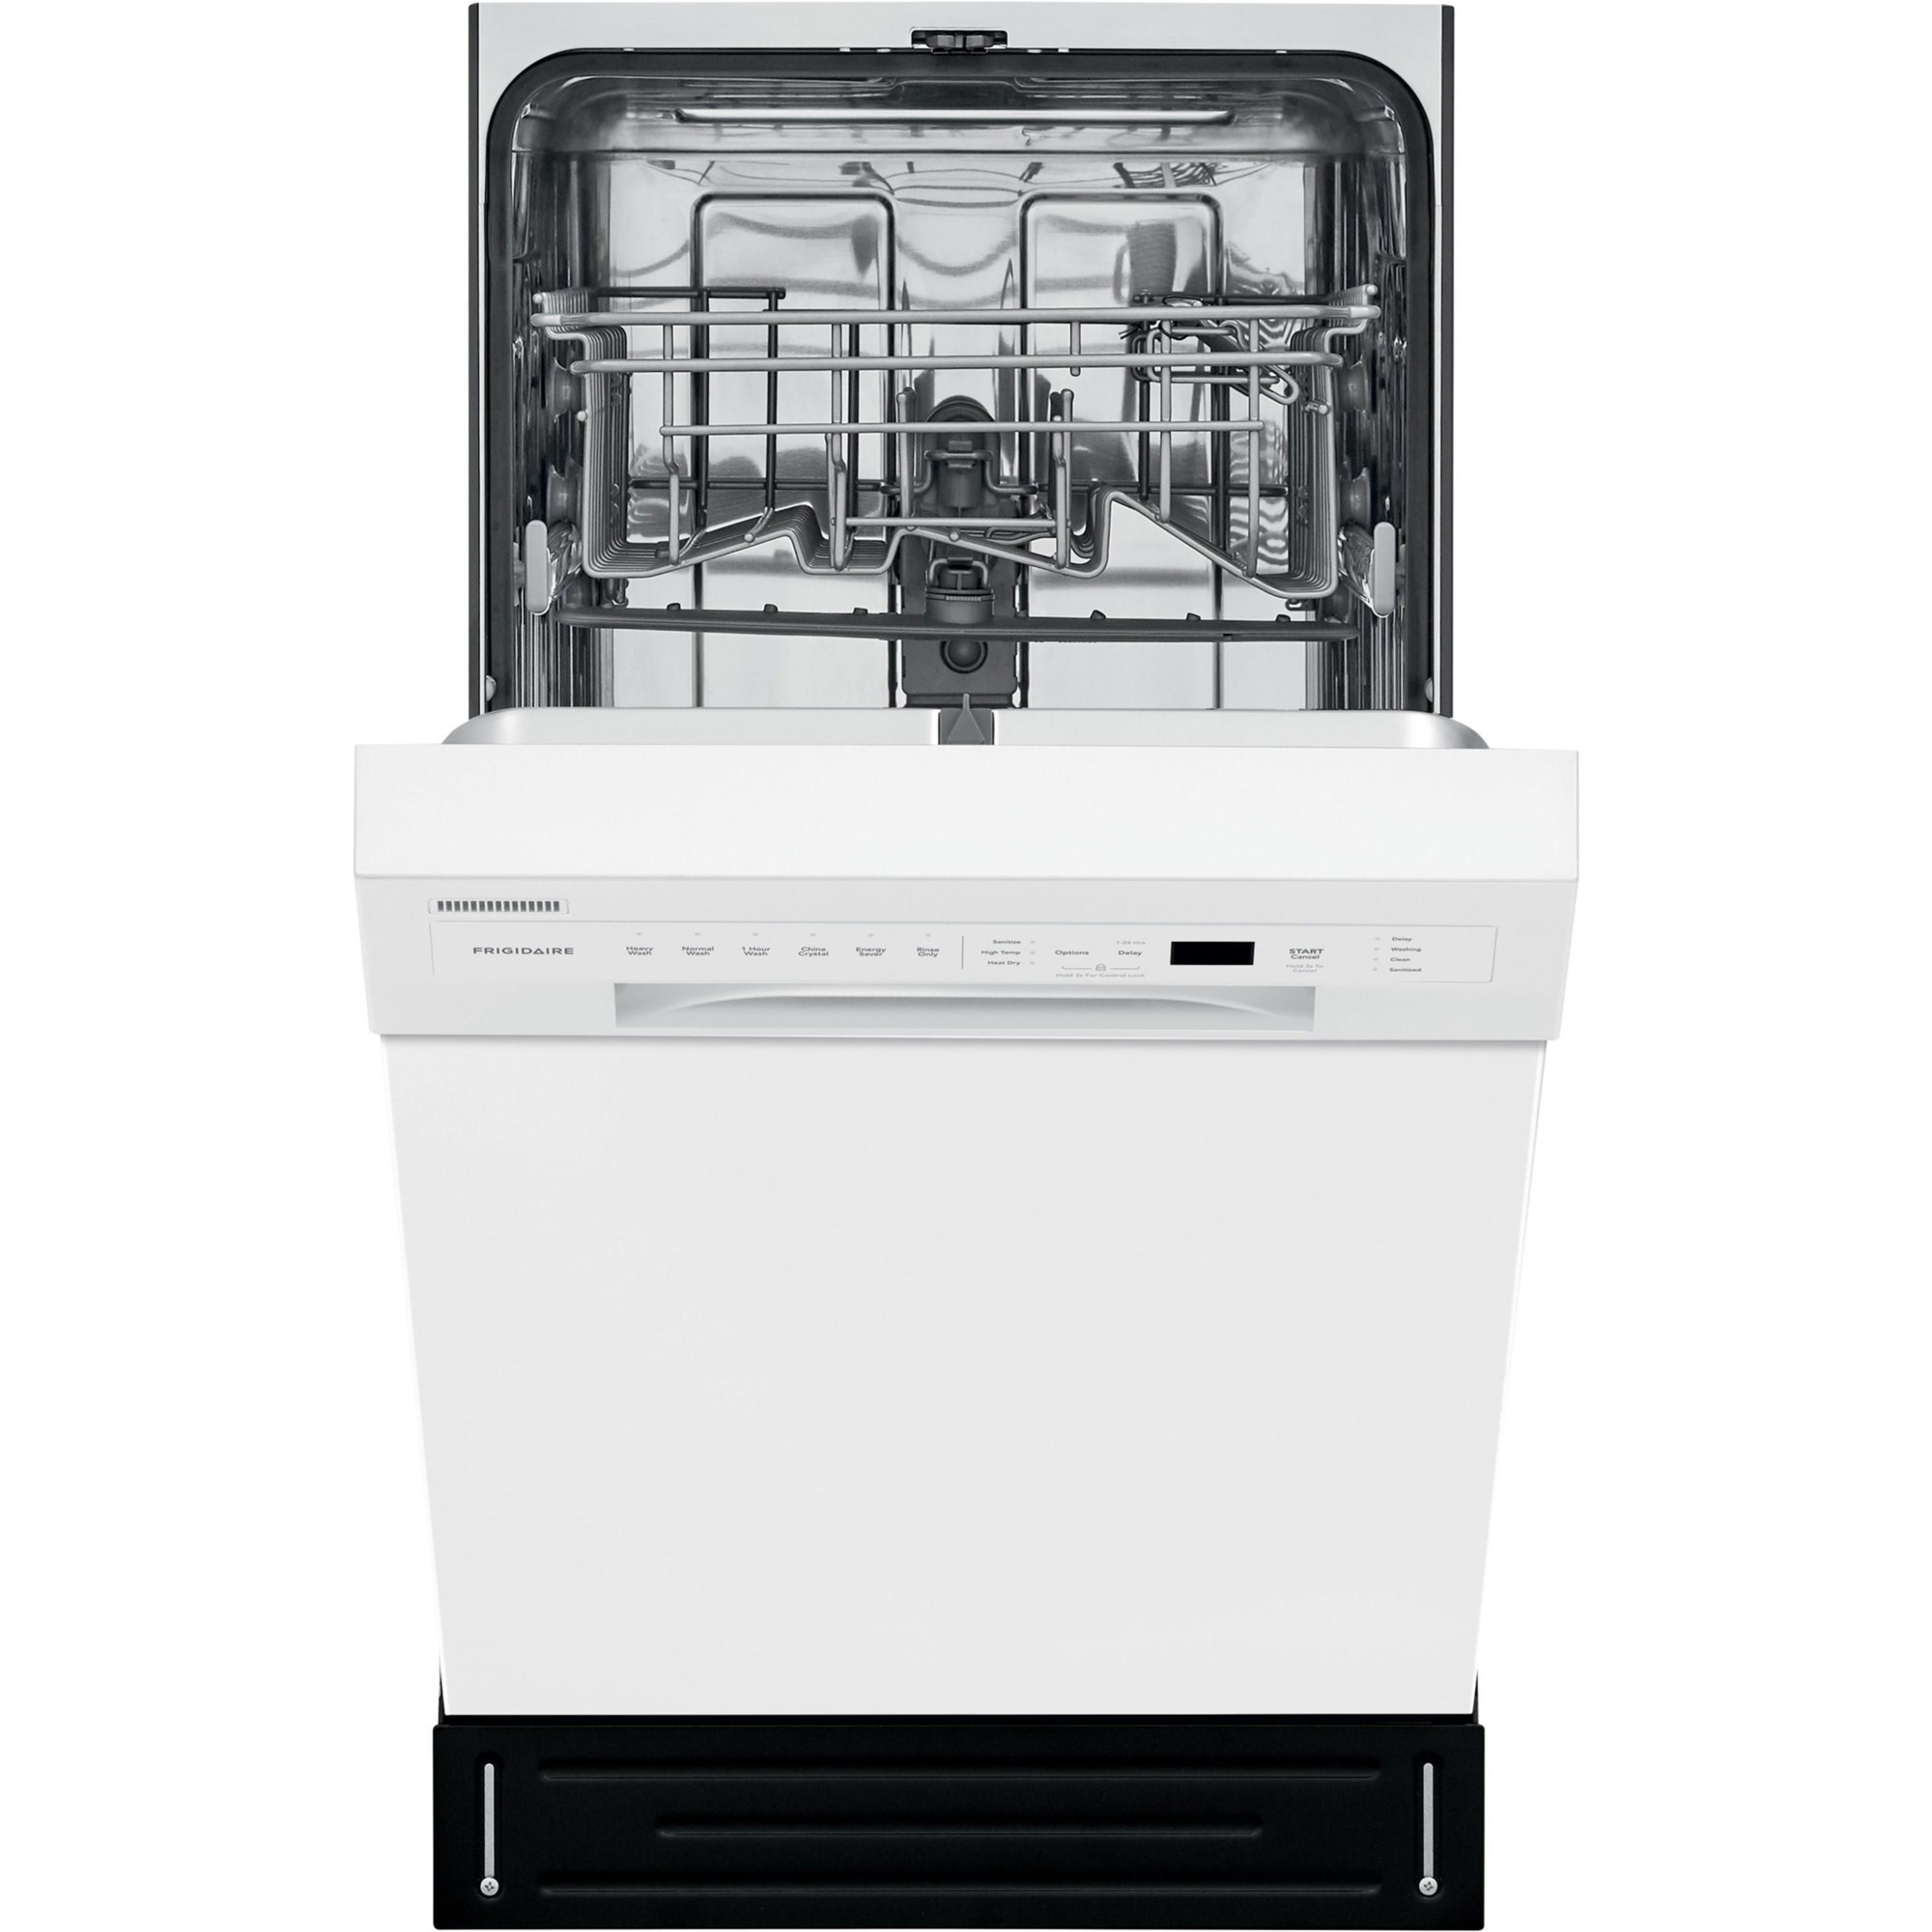 18 Built-In Dishwasher